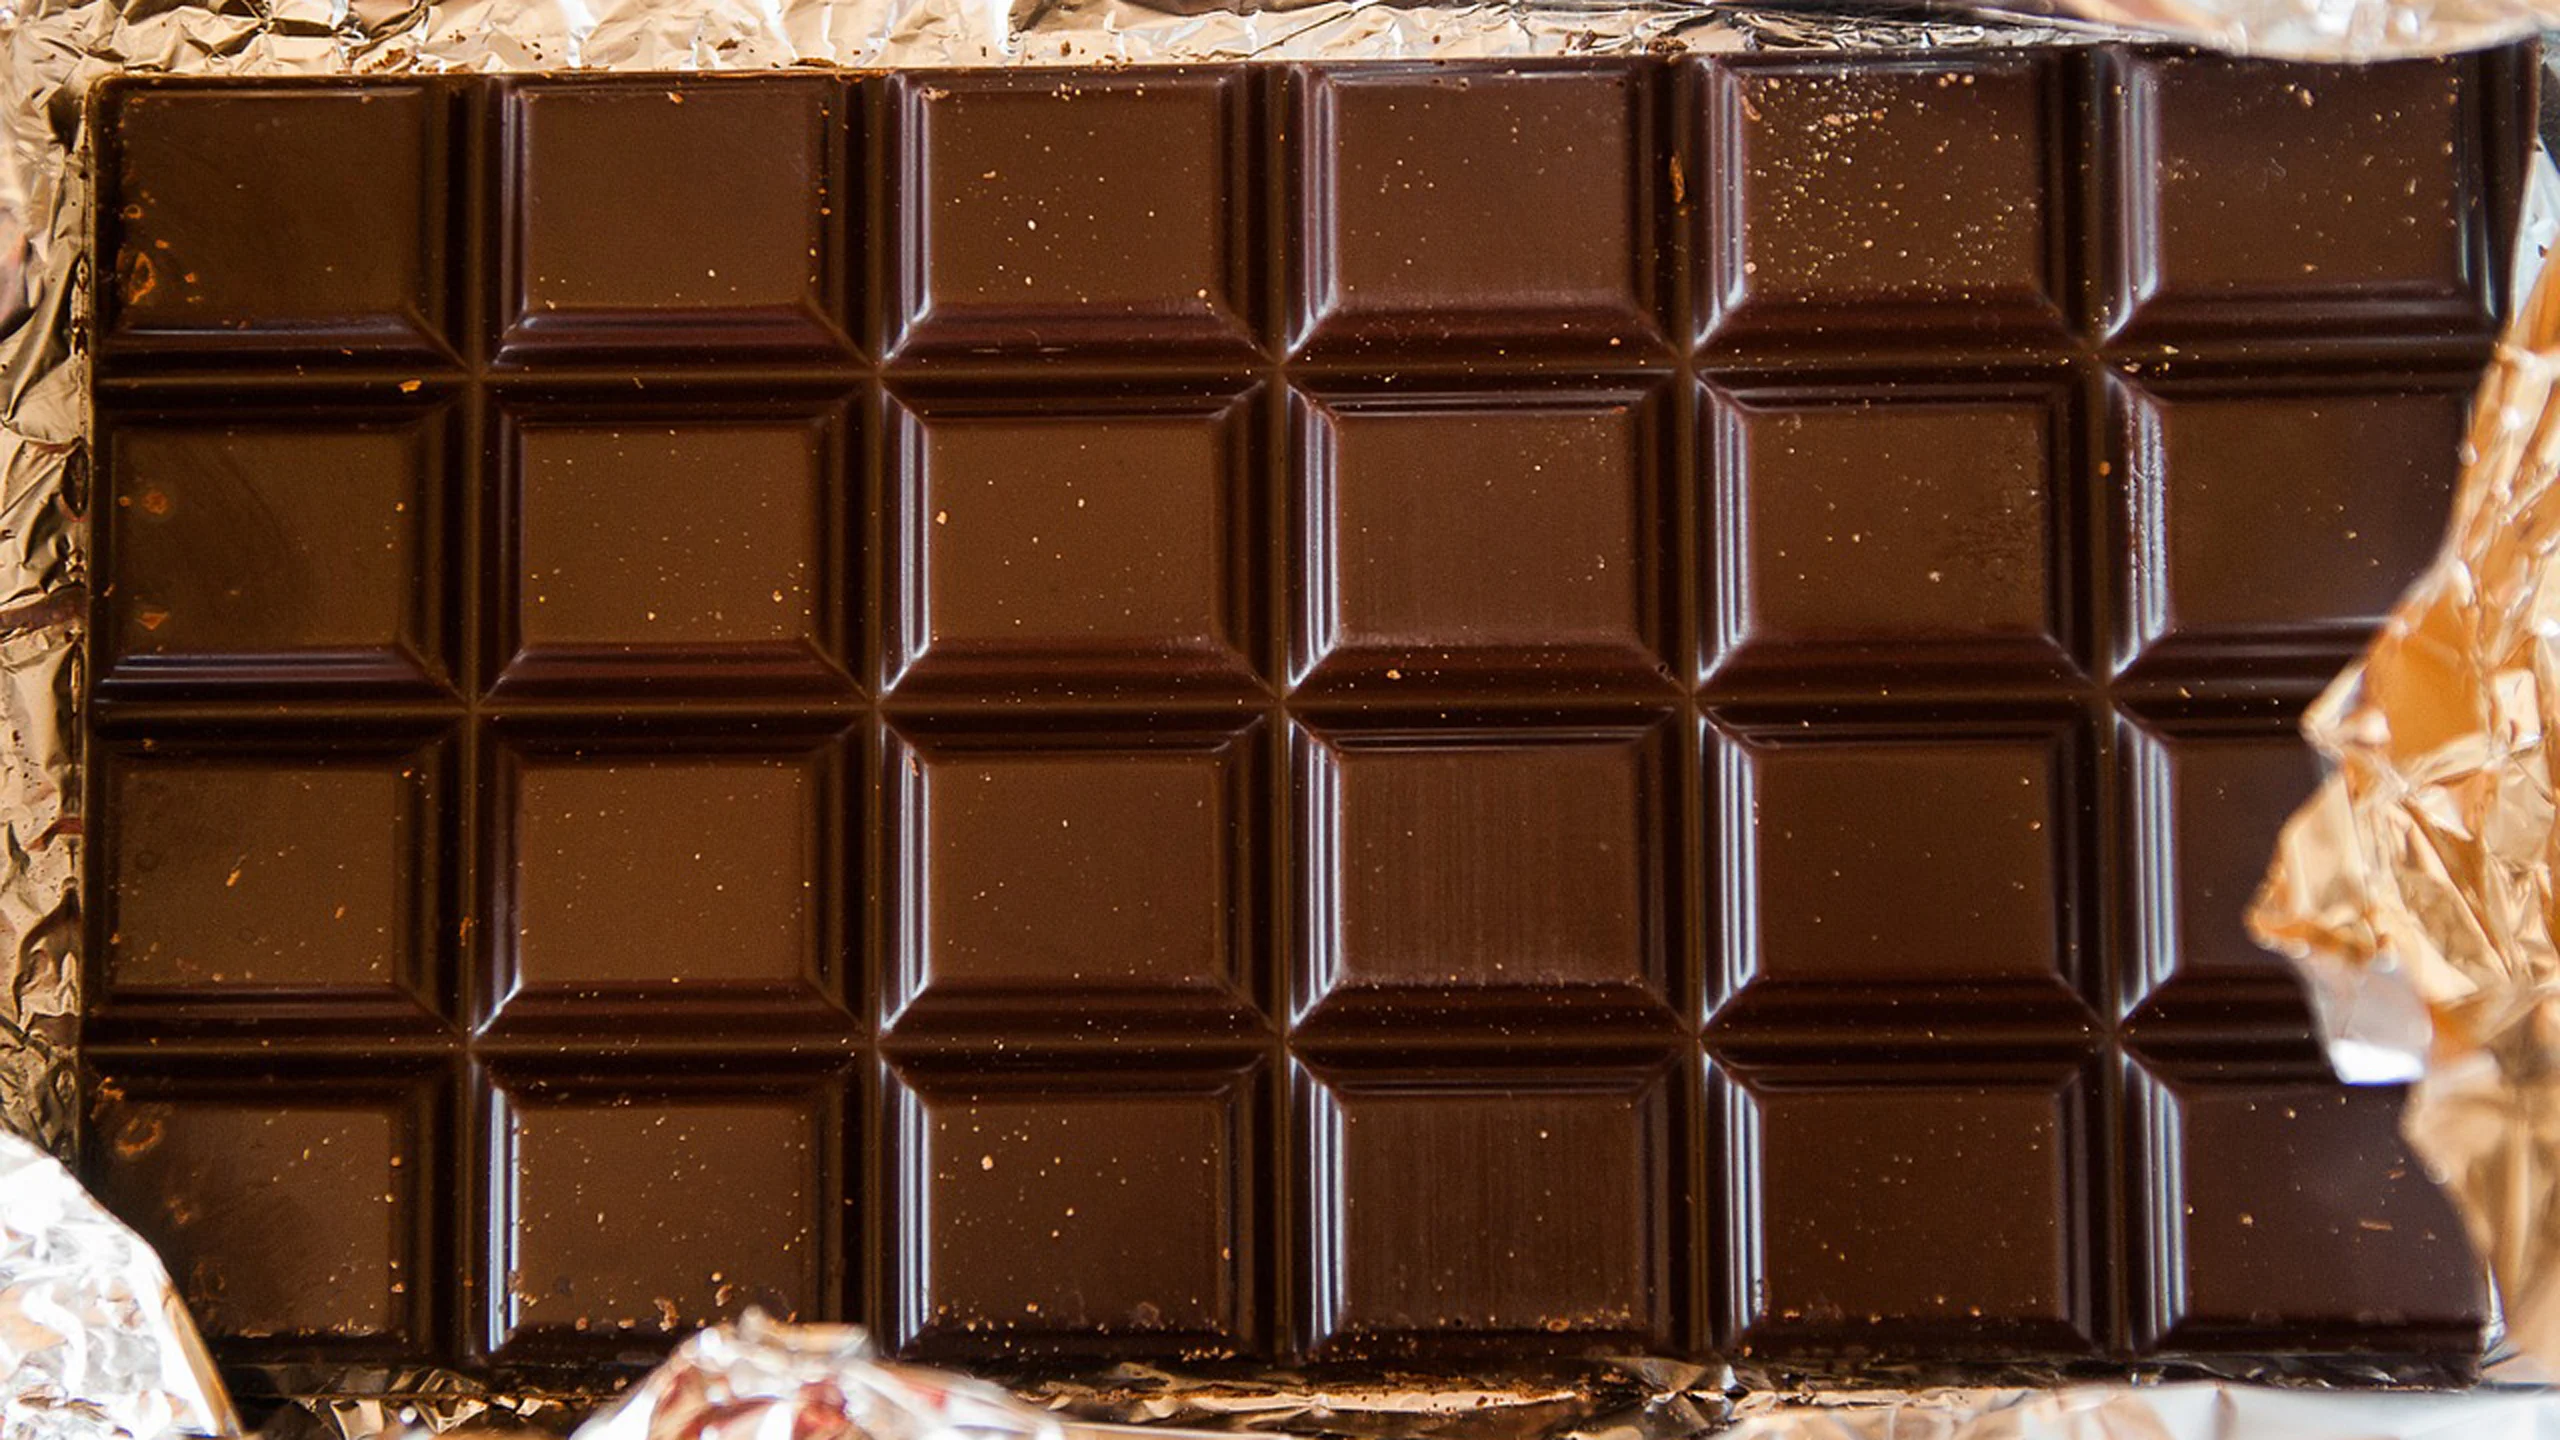 Razones para comer chocolate oscuro